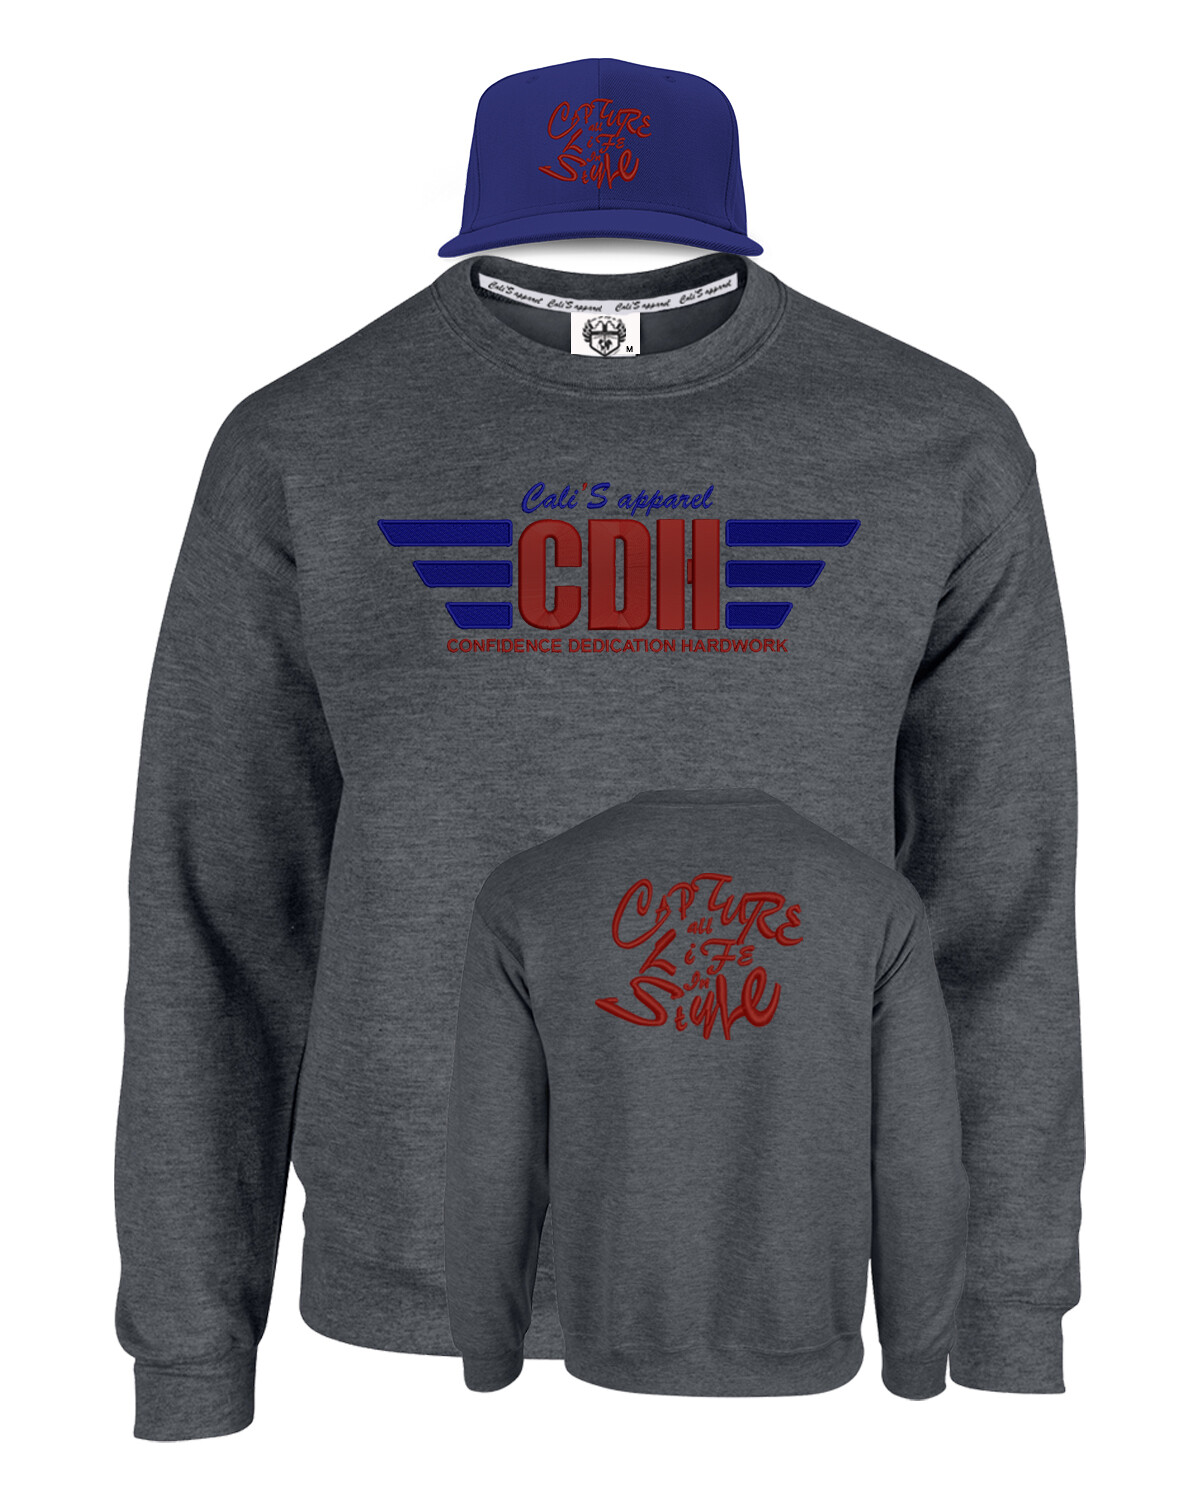 Grey Cali's apparel CDH Confidence/Dedication/Hardwork Wings Badge of Honor Unisex Crewneck Sweatshirt & Snapback Package Deal